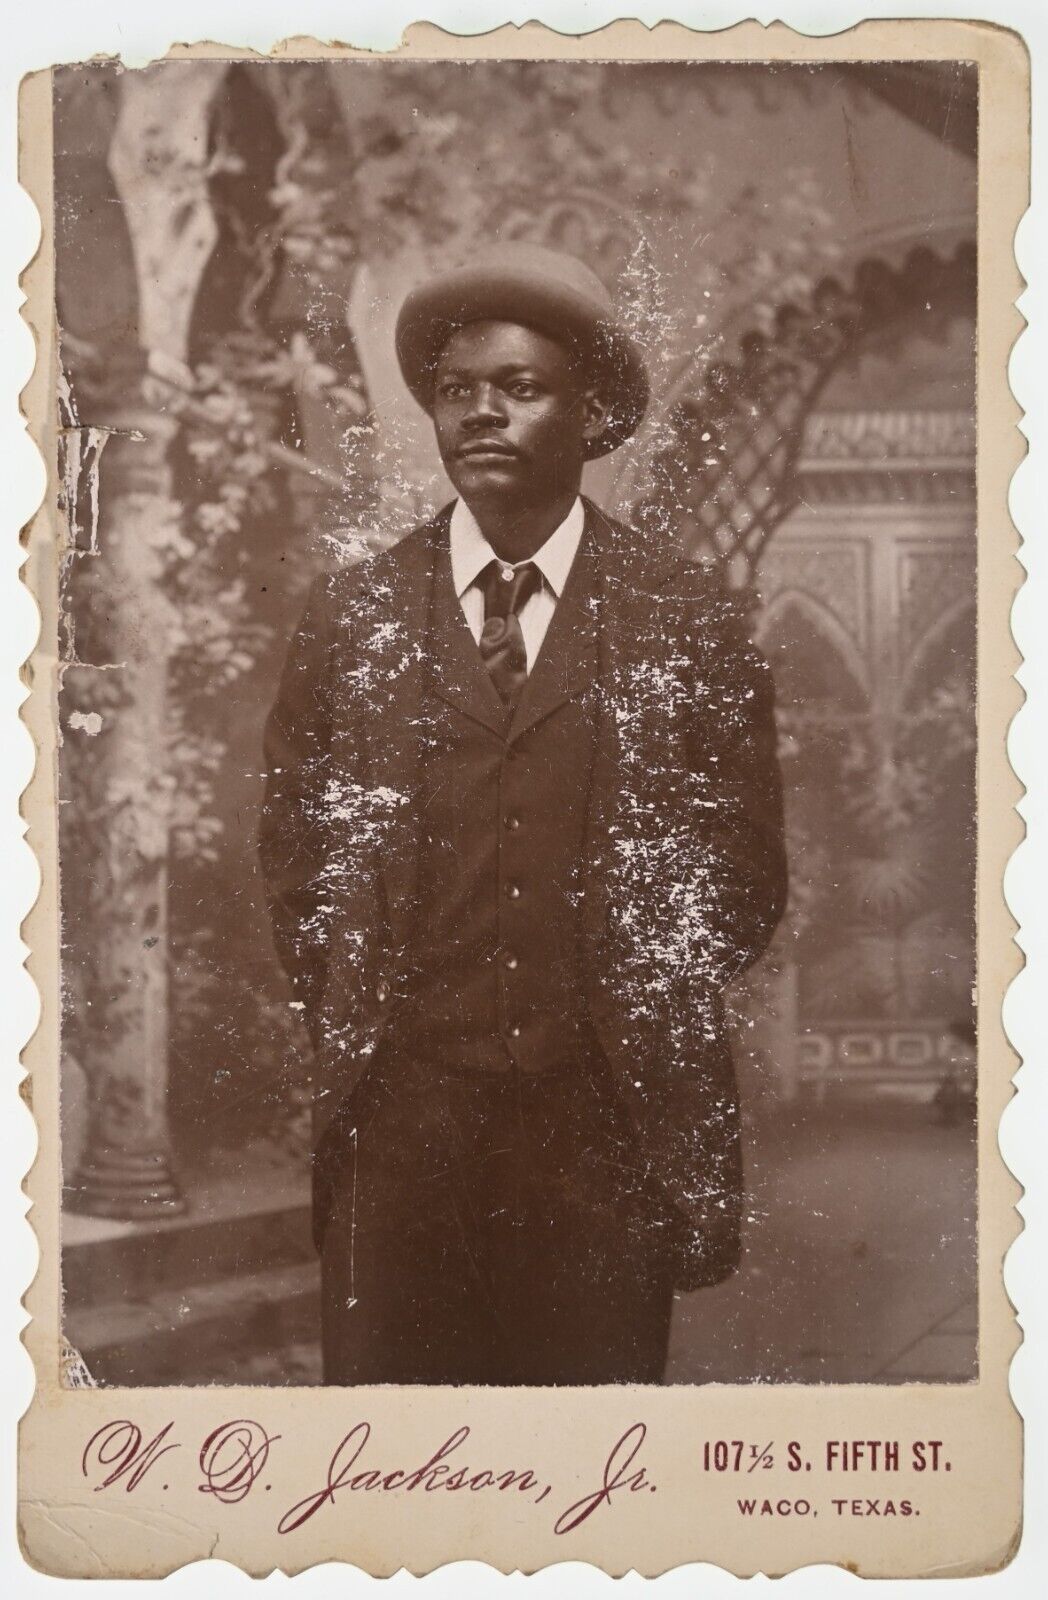 CIRCA 1890s CABINET CARD JACKSON HANDSOME NAMED AFRICAN AMERICAN MAN WACO TEXAS